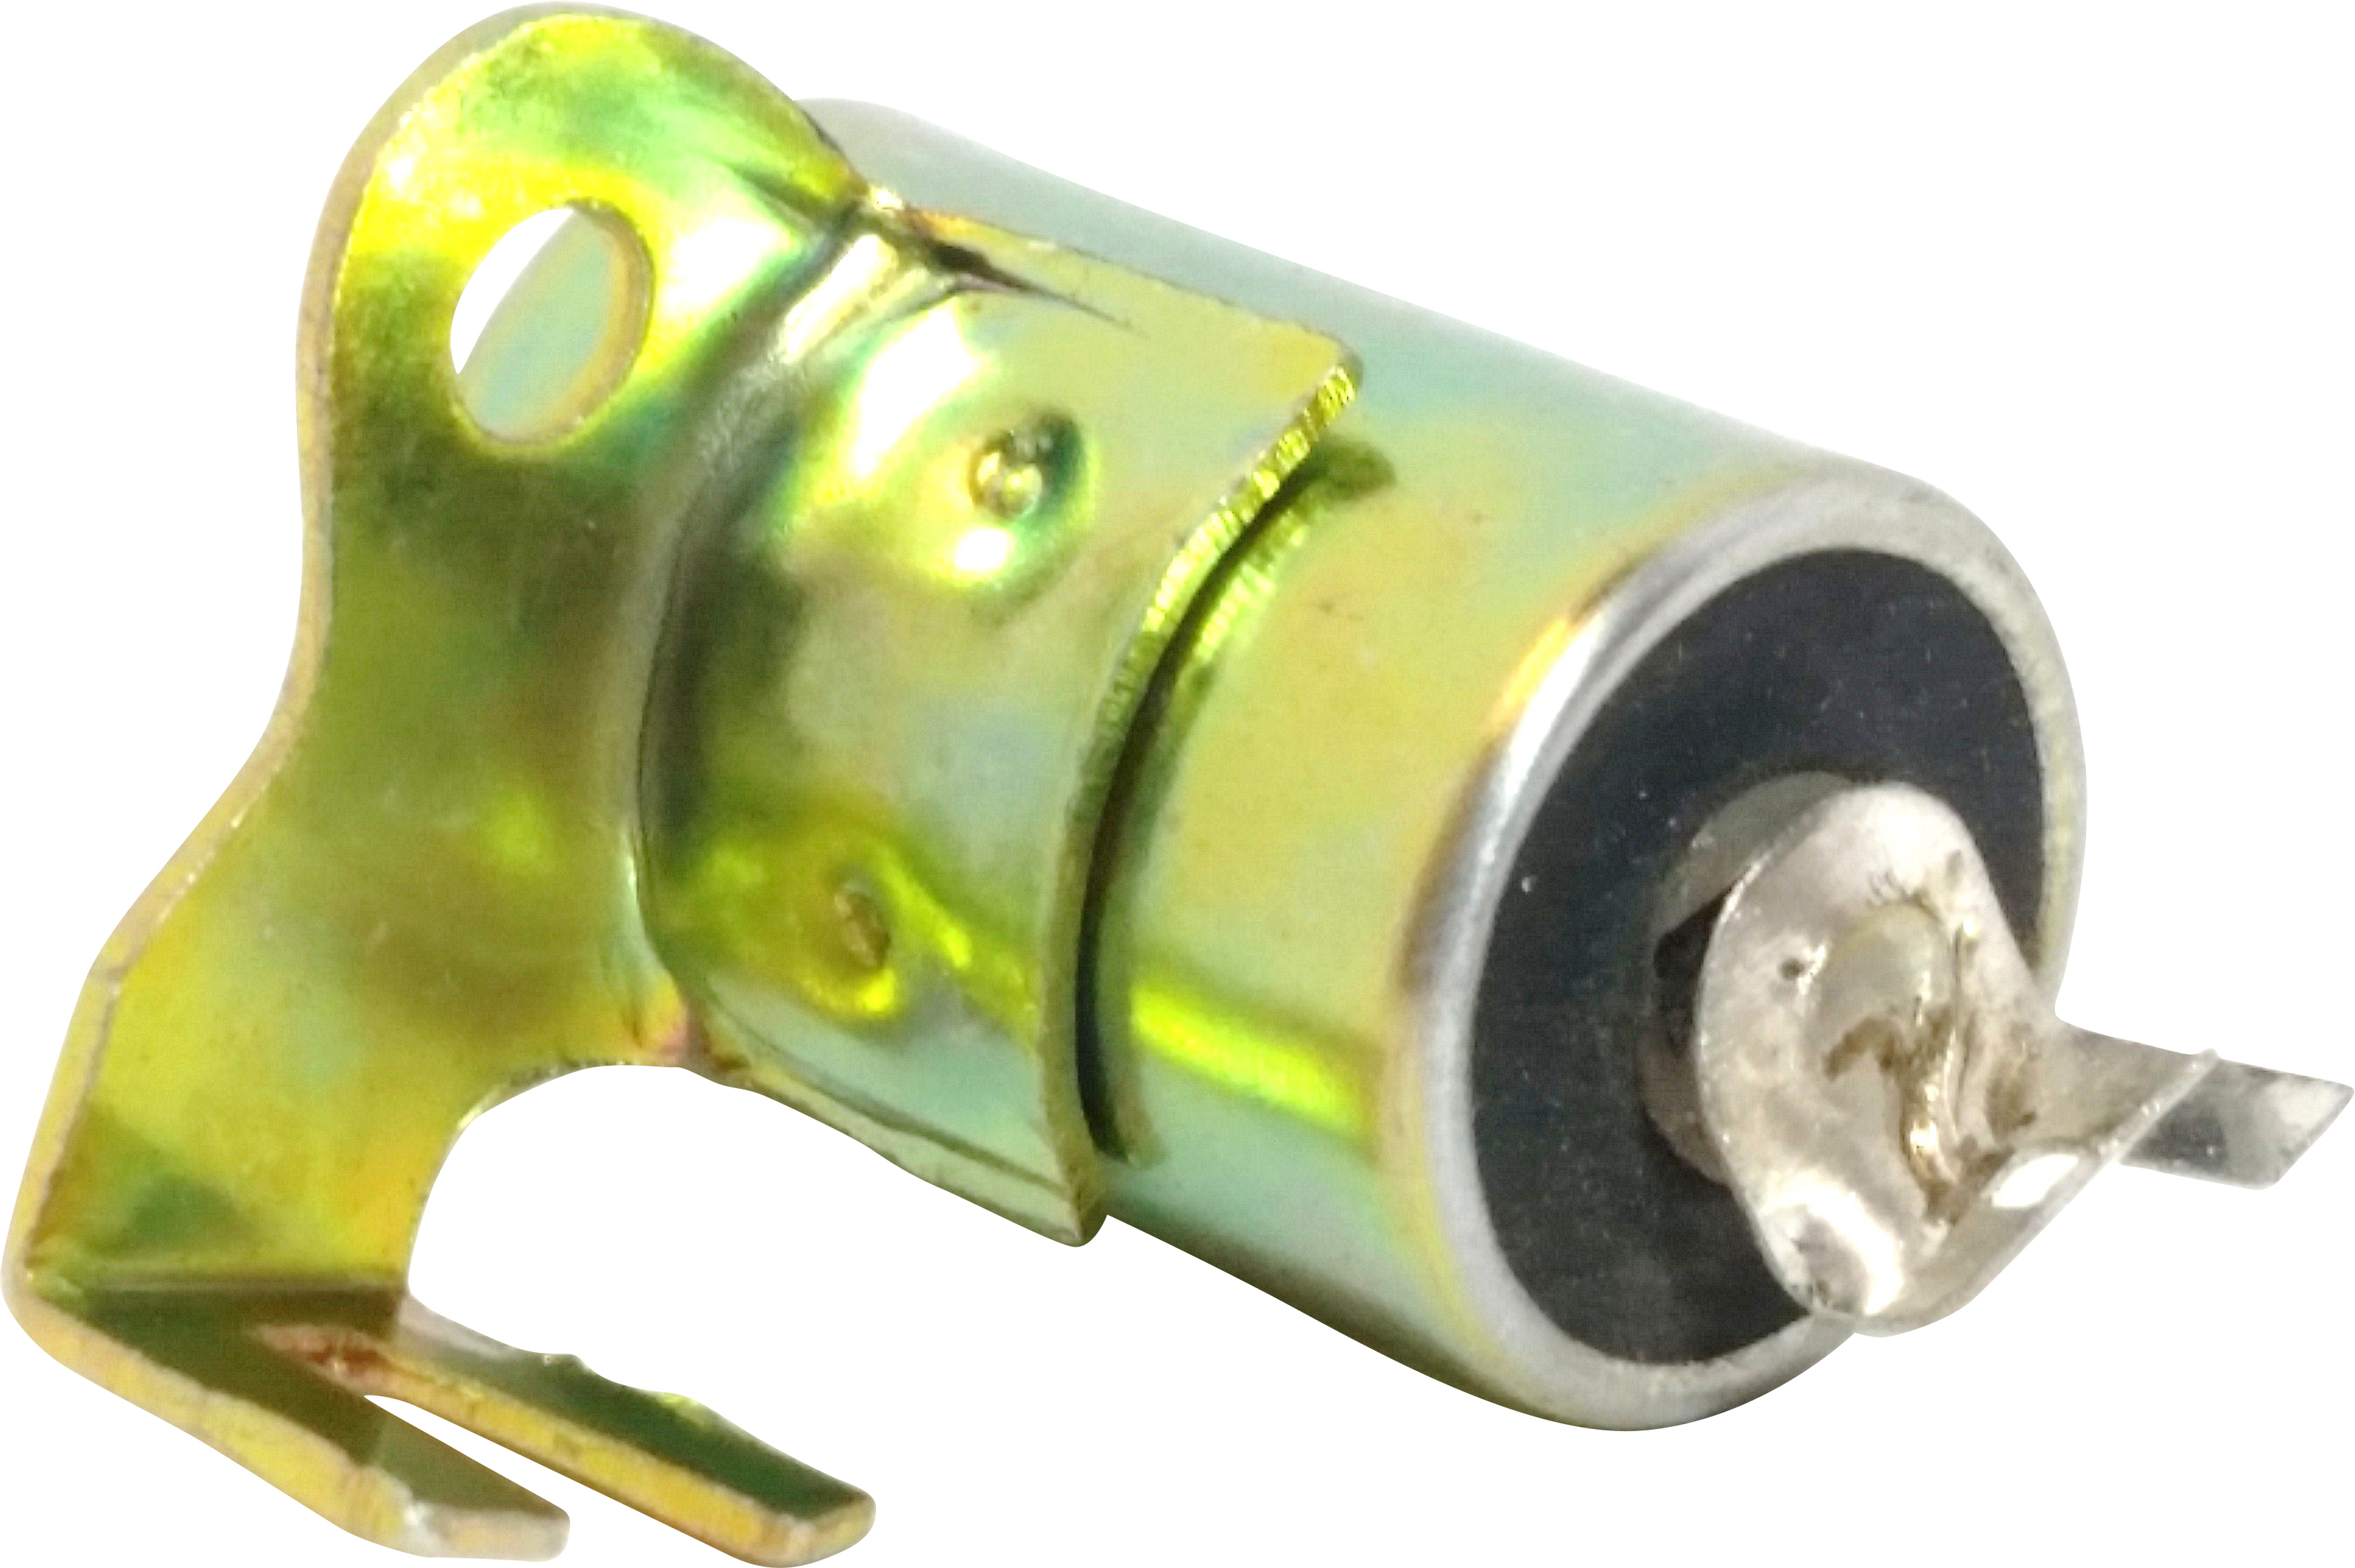 Ignition Condenser - Replaces Honda # 30250-041-005 - Click Image to Close